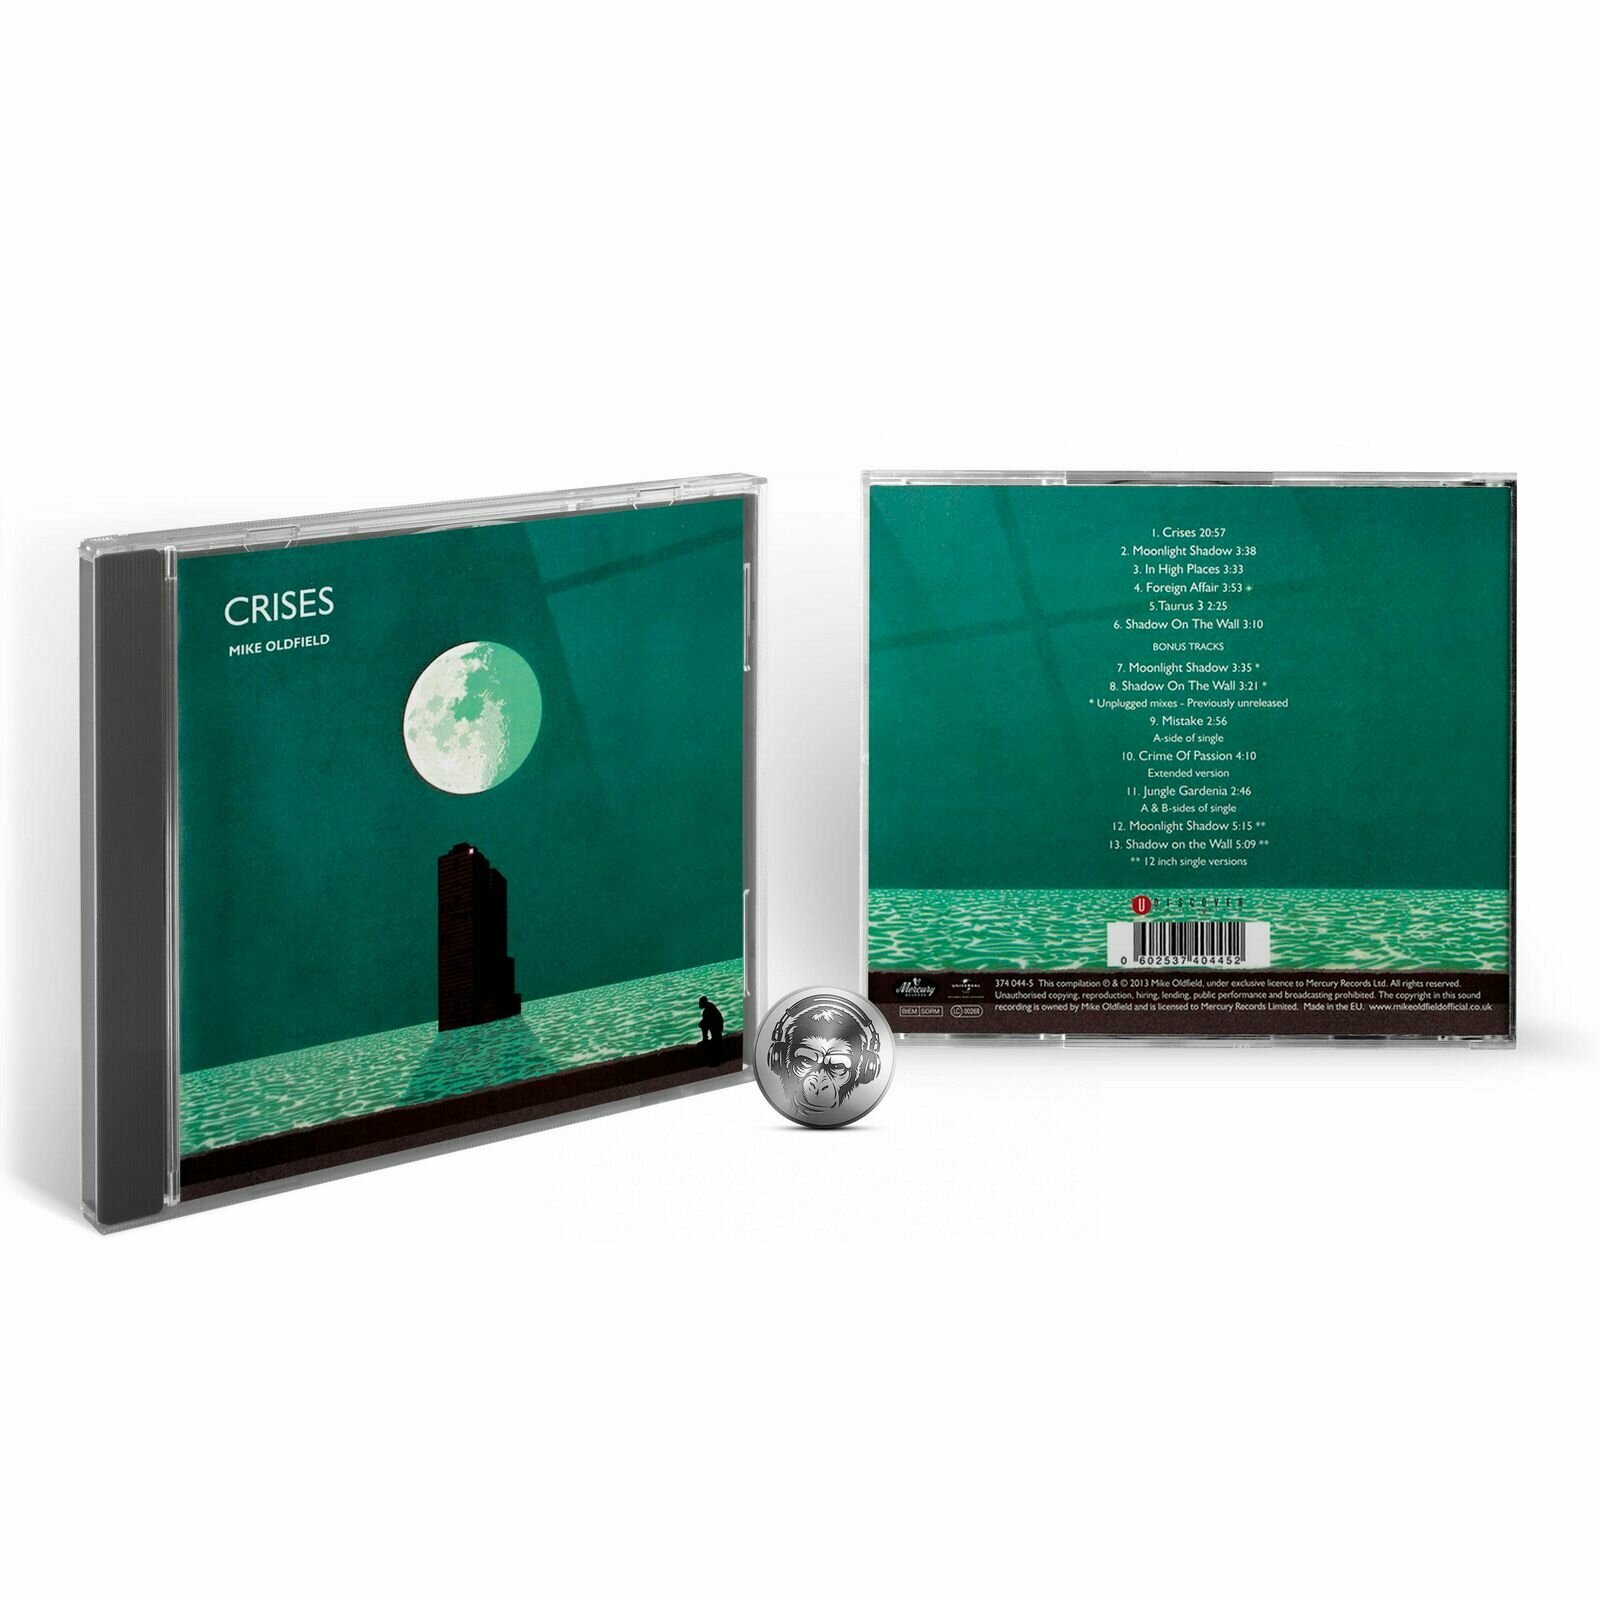 Mike Oldfield - Crises (1CD) 2013 Mercury, Jewel Аудио диск